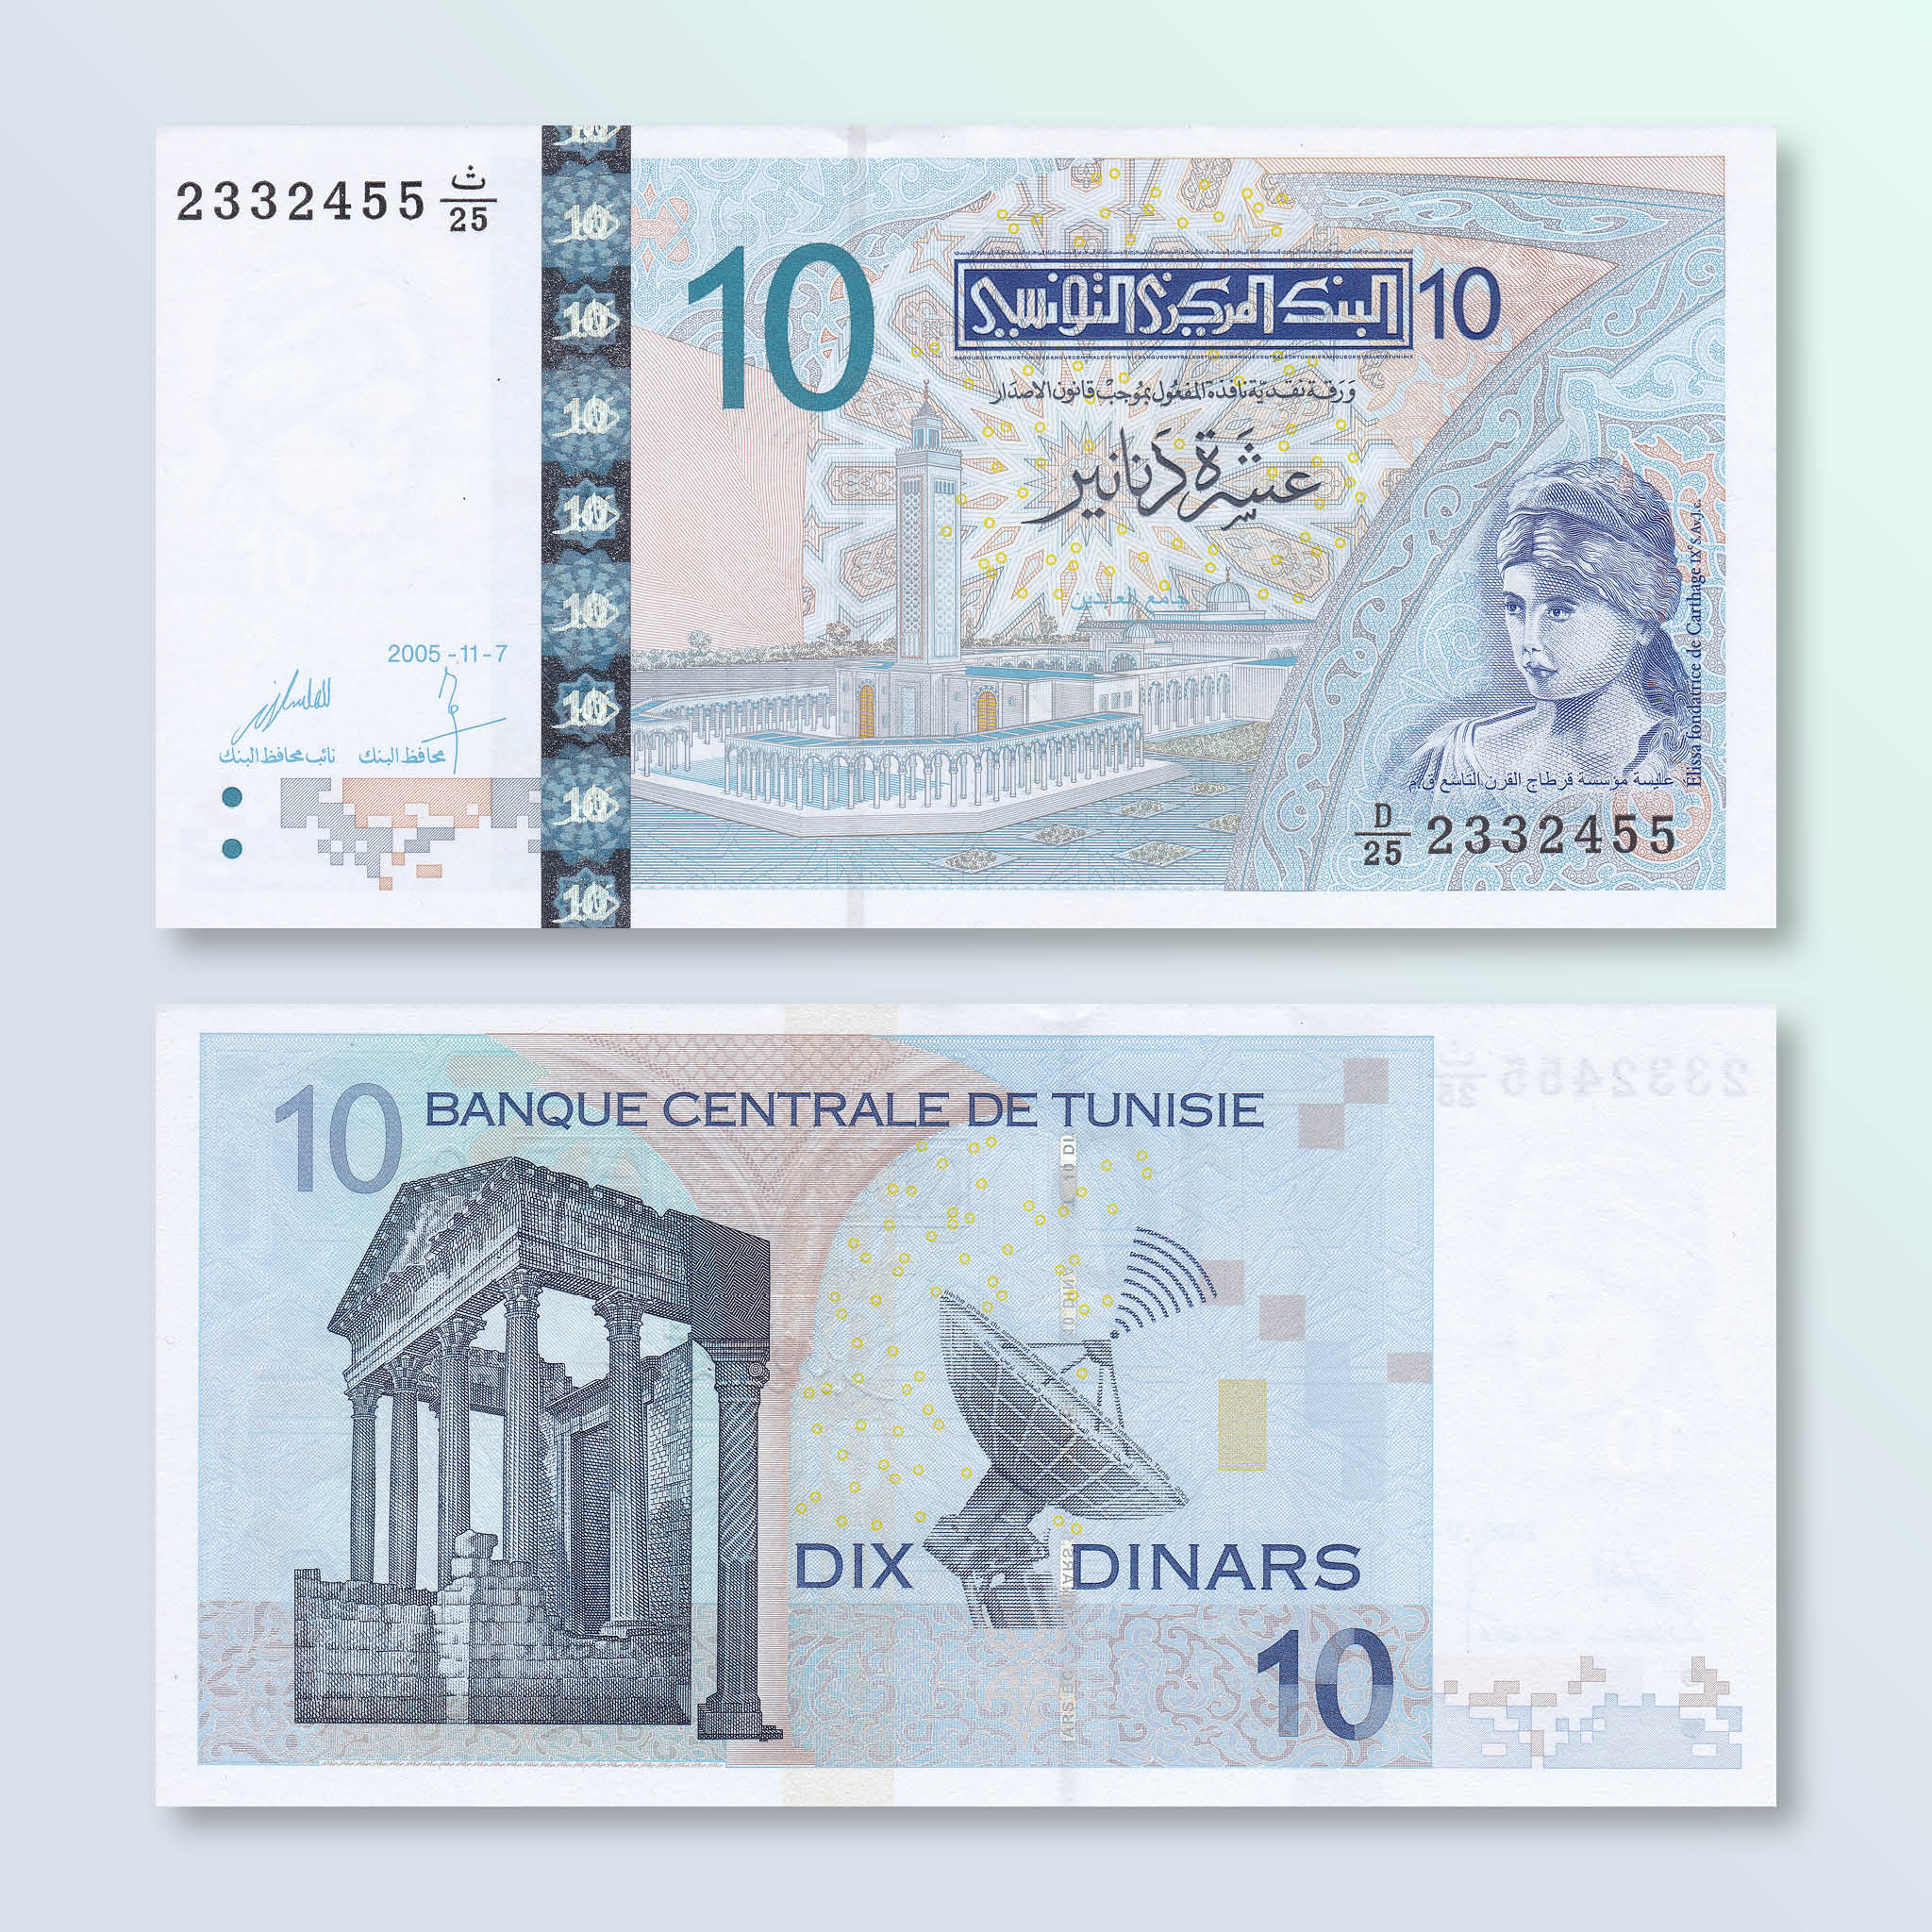 Tunisia 10 Dinars, 2005, B531a, P90, UNC - Robert's World Money - World Banknotes